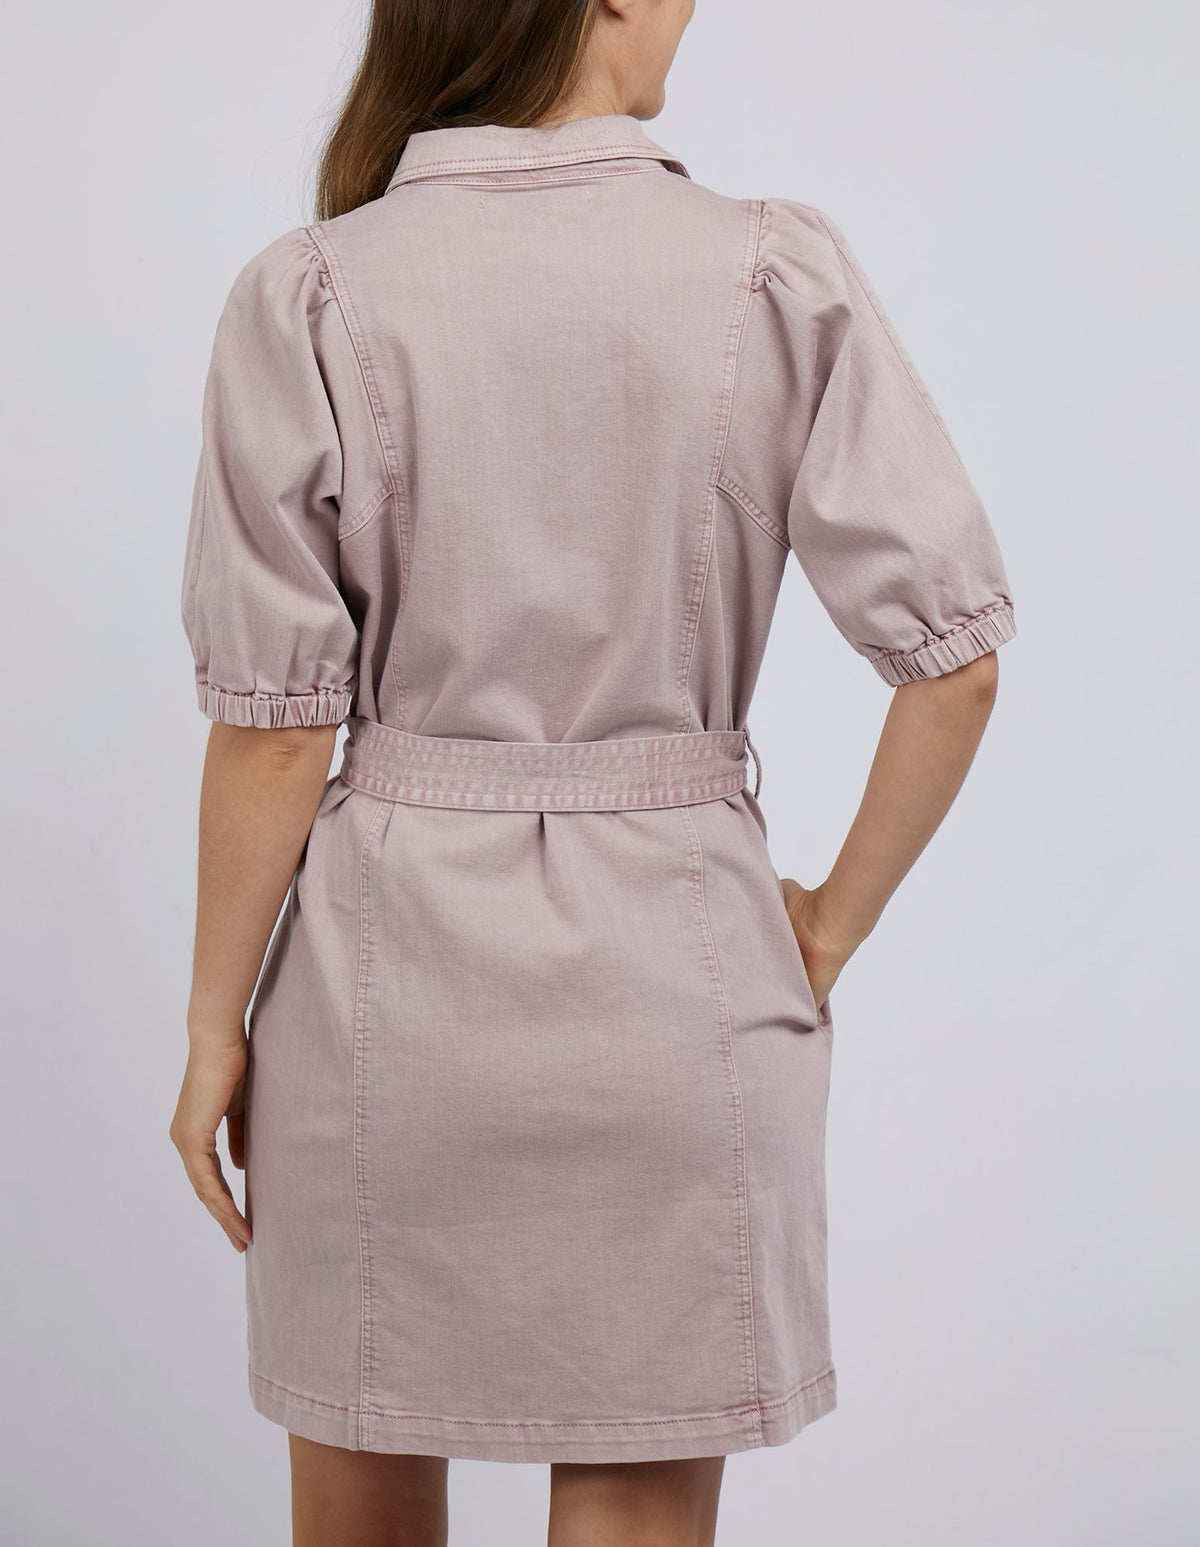 Miranda Shirt Dress - Washed Pink - Foxwood - FUDGE Gifts Home Lifestyle